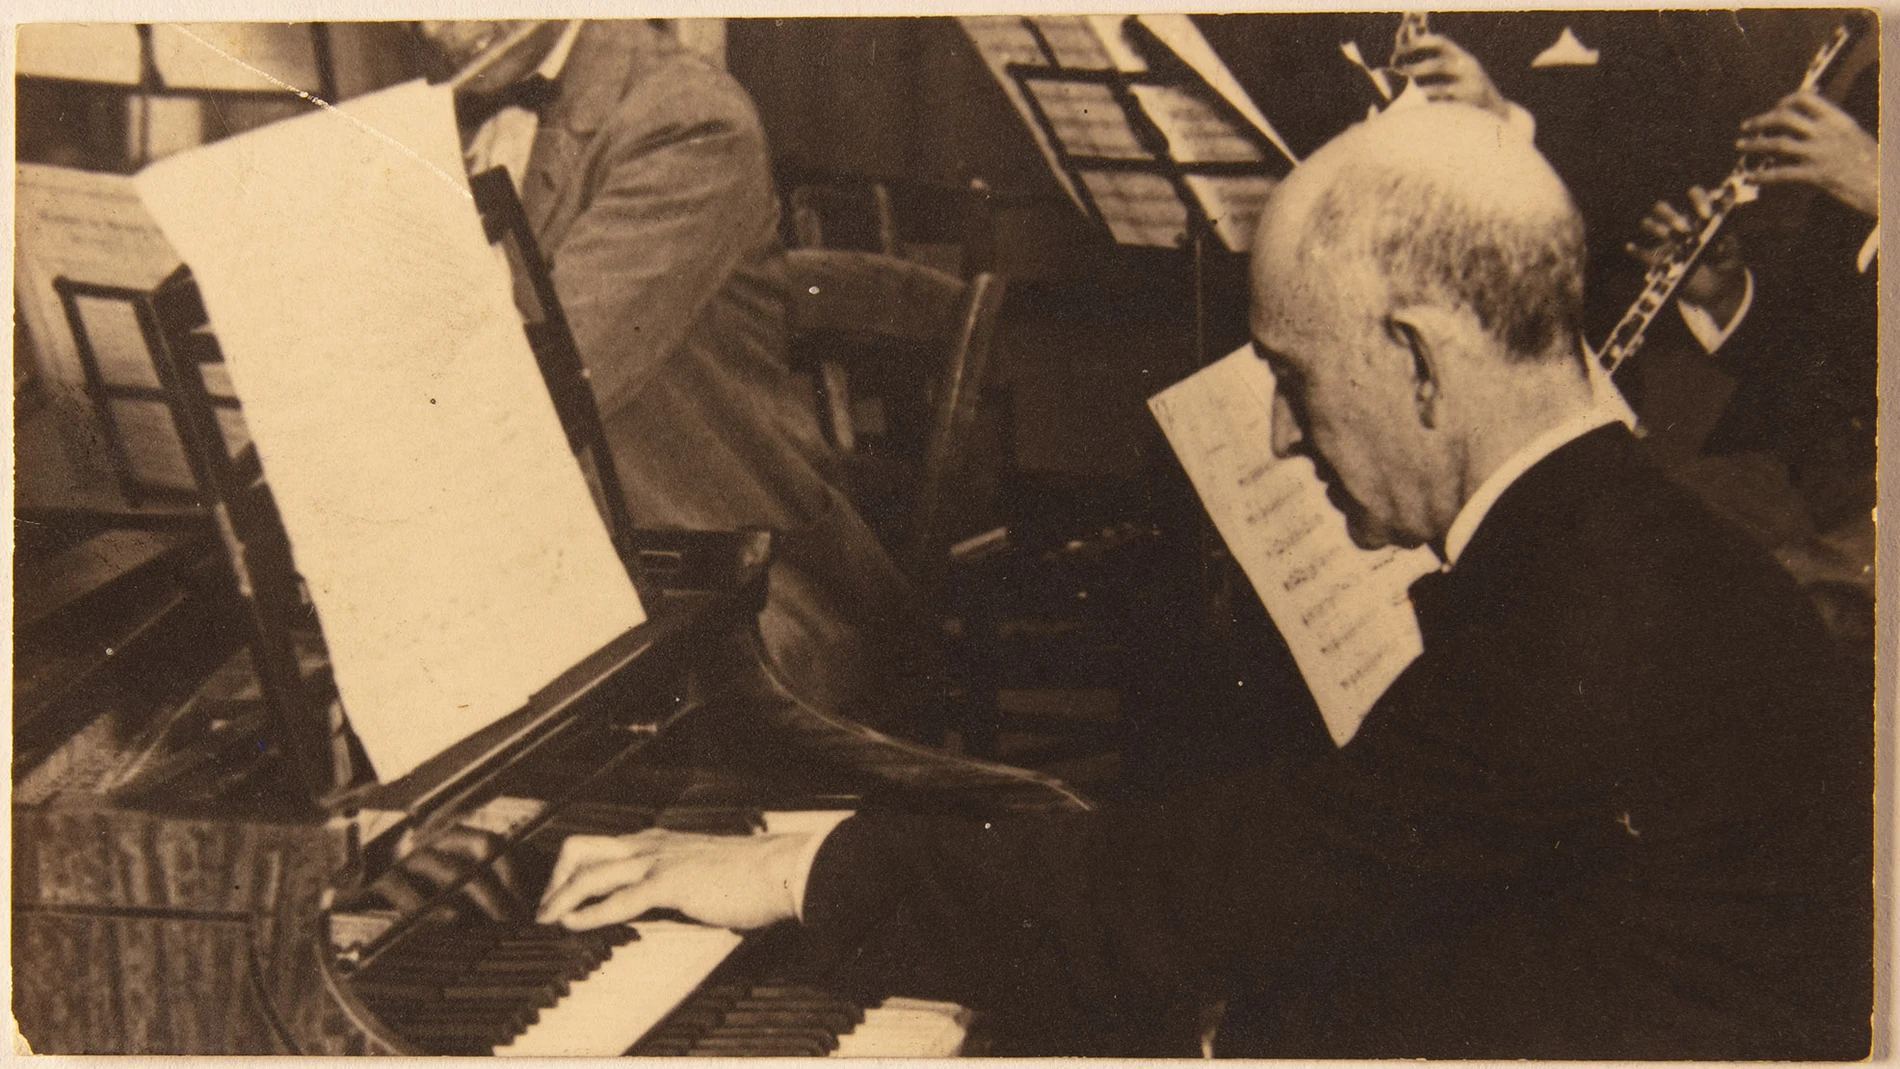 Una imagen de Manuel de Falla al piano